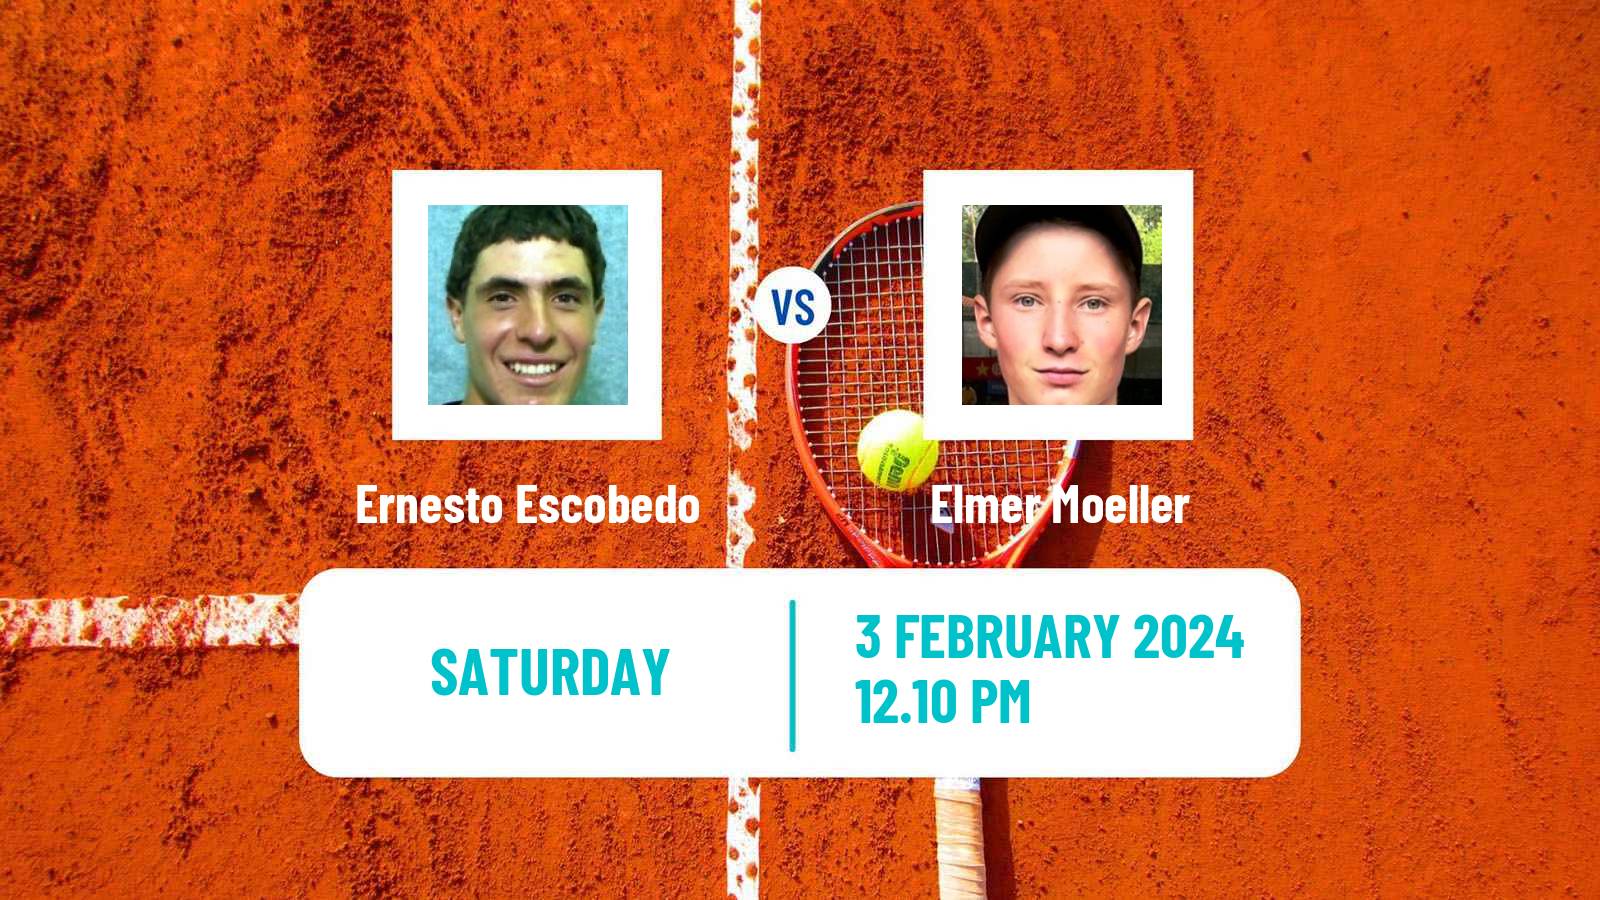 Tennis Davis Cup World Group I Ernesto Escobedo - Elmer Moeller